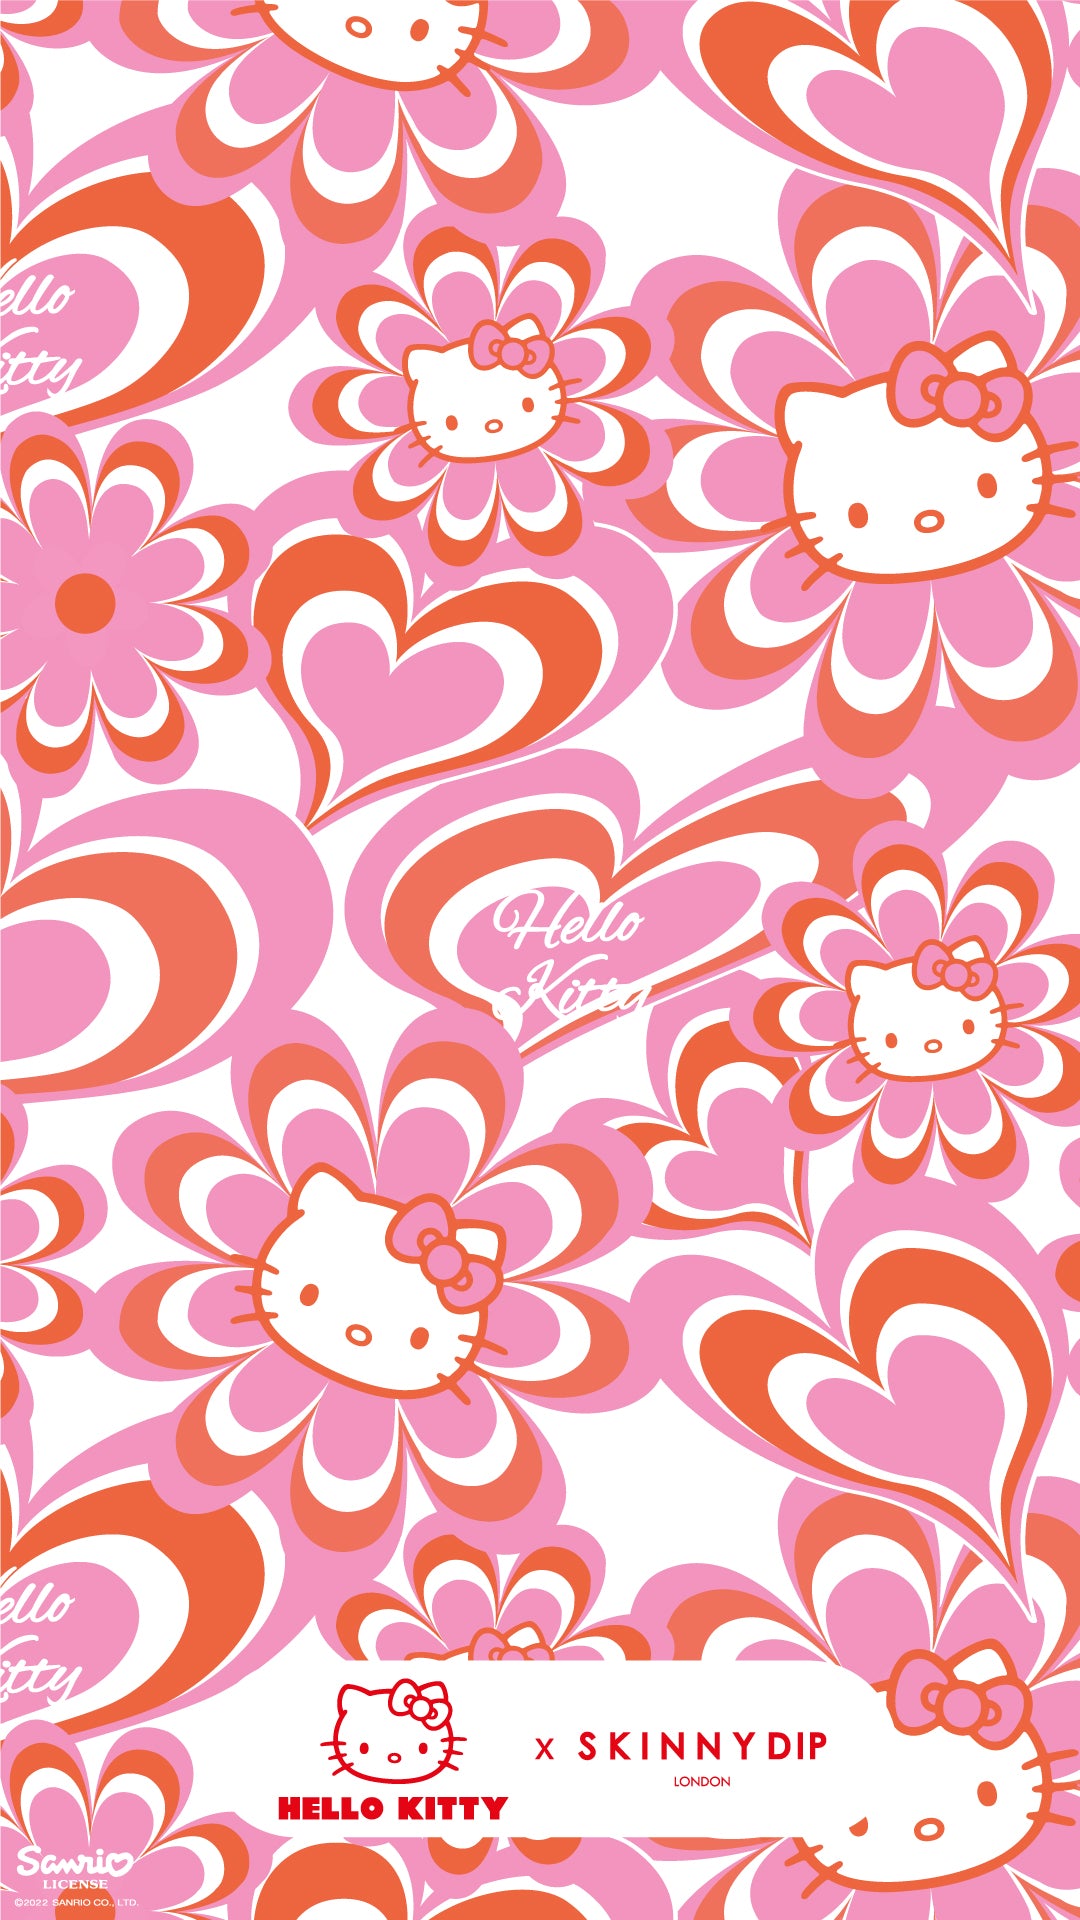 Hello Kitty x Skinnydip Drop 2 Phone Wallpaper 01